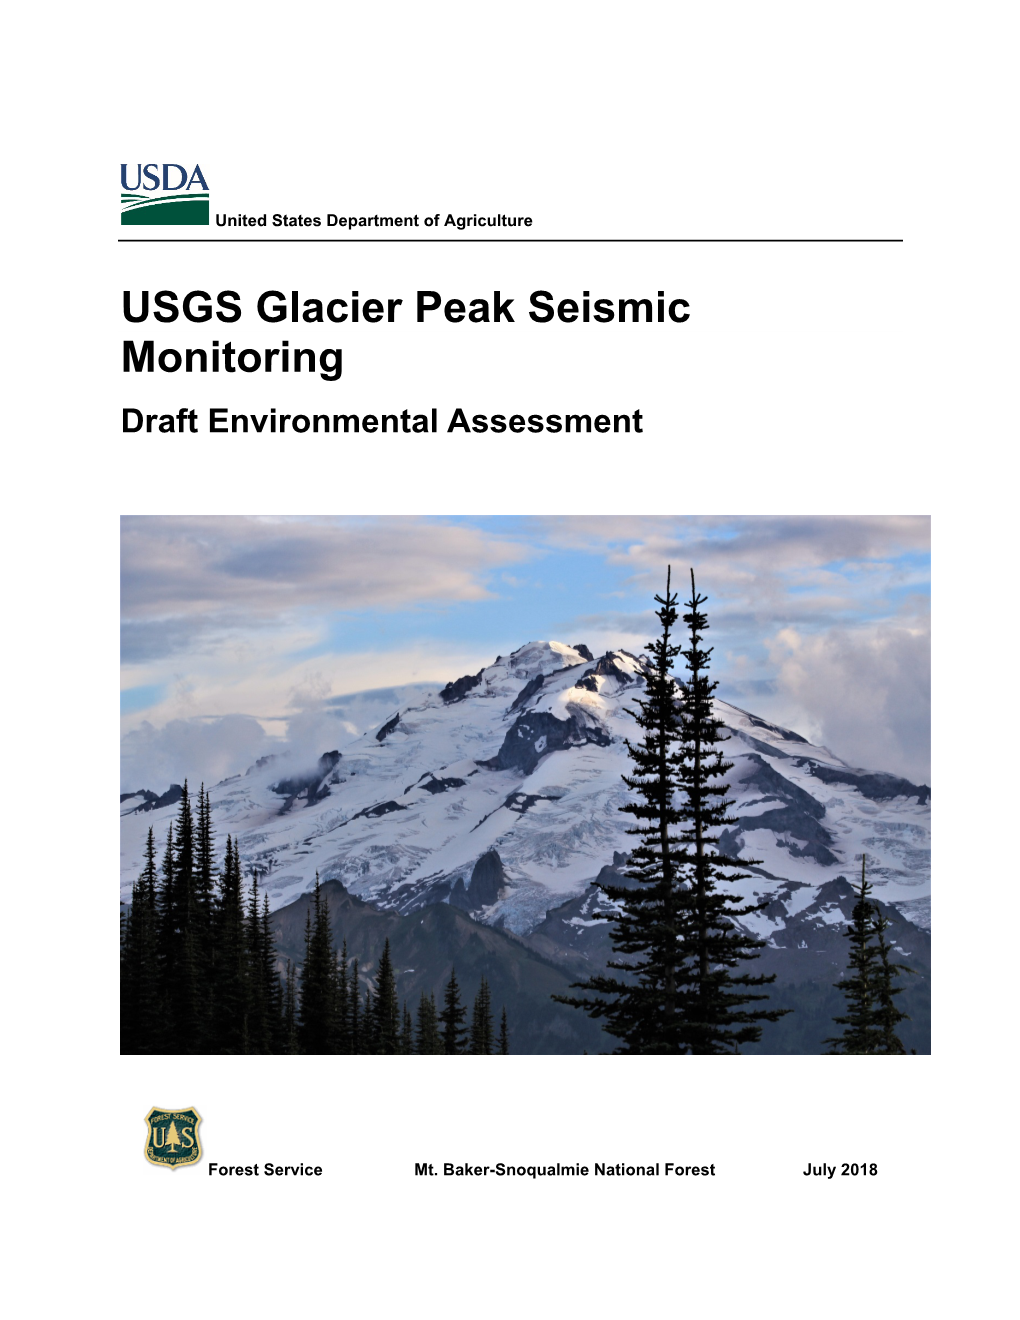 Glacier Peak Seismic Monitoring Draft Environmental Assessment